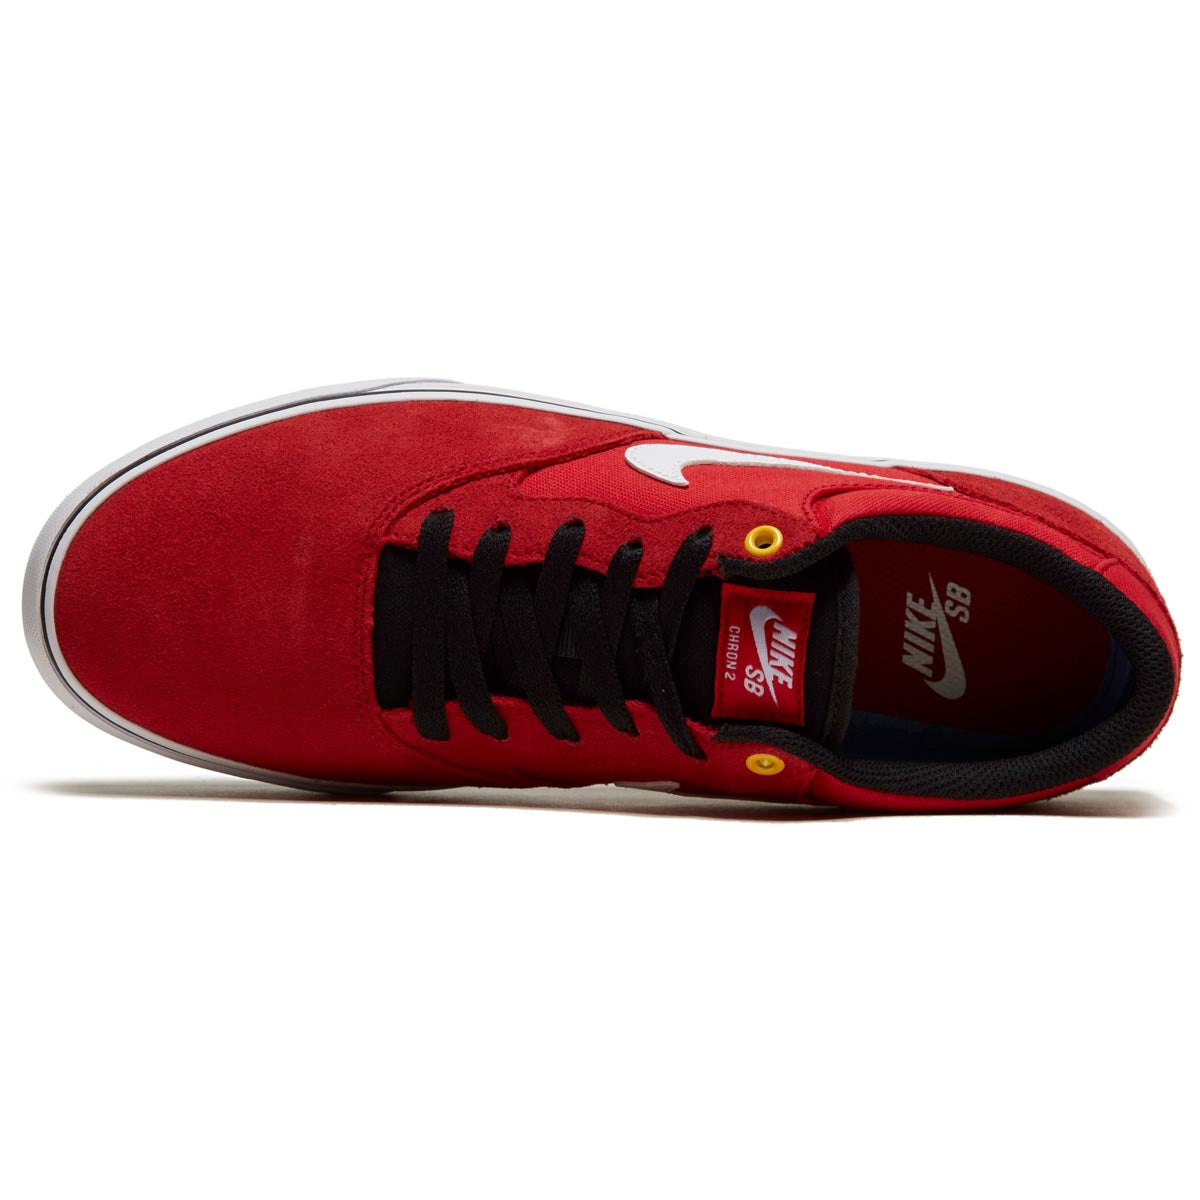 Nike SB Chron 2 Shoes - University Red/White/Black/White image 3